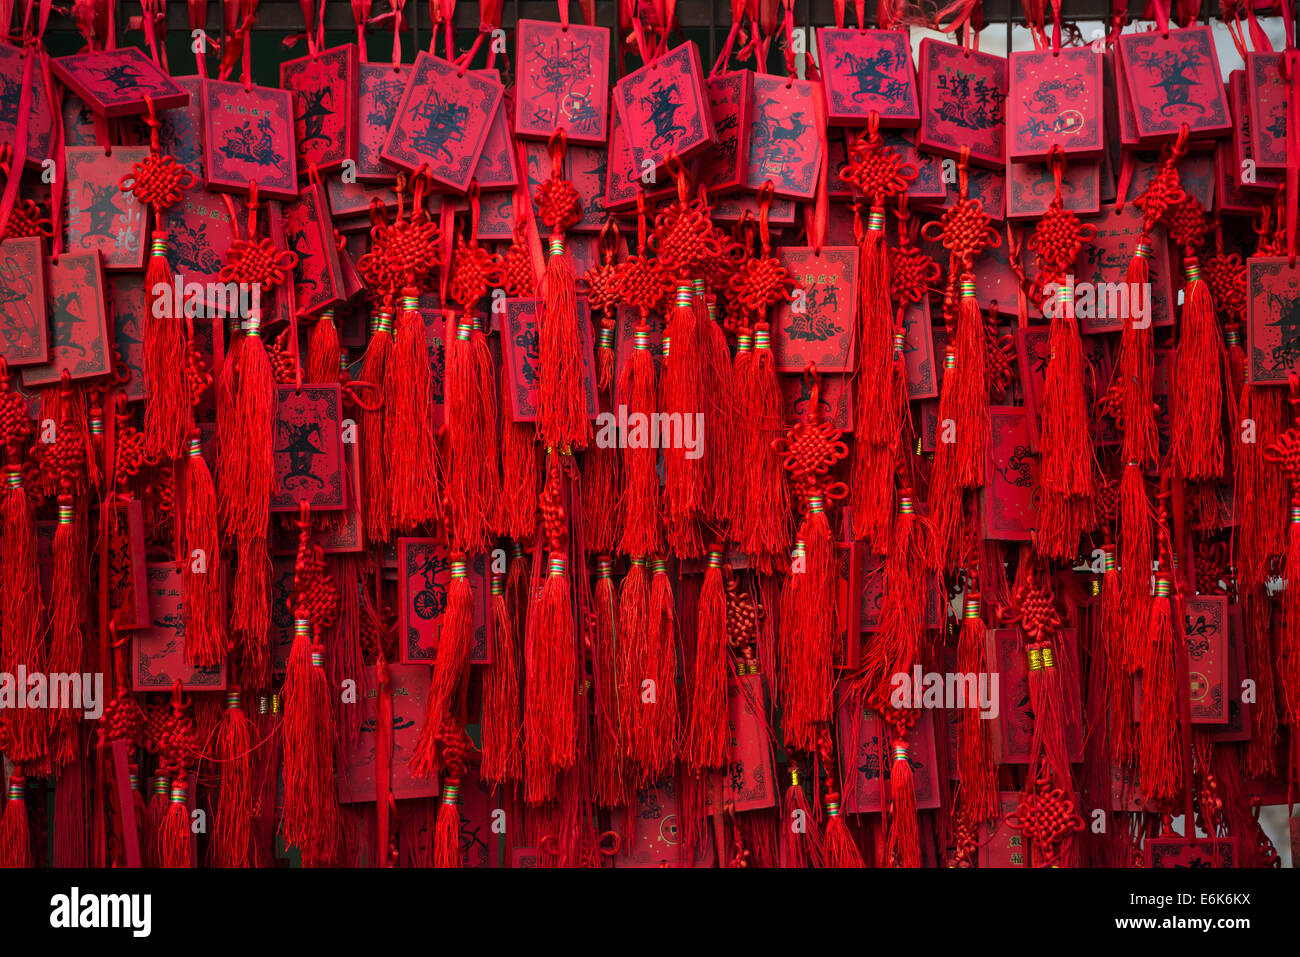 Cartes chinoise rouge qui souhaitent, Beijing, Chine Banque D'Images